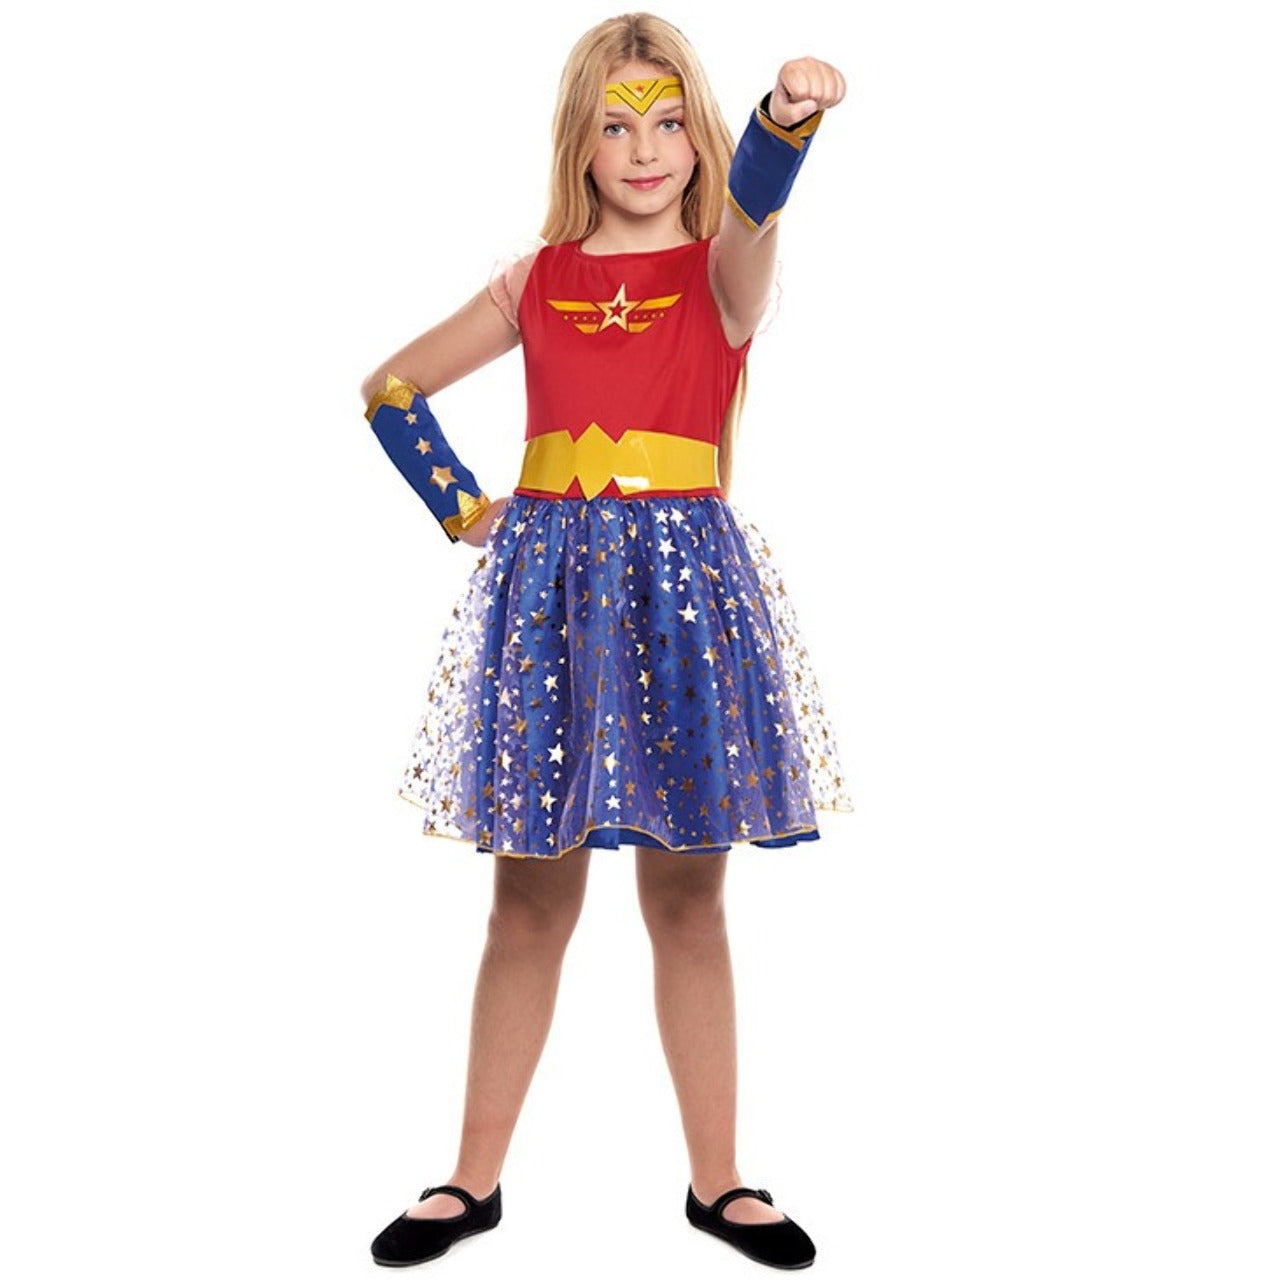 Acquista online il costume di Wonder Heroine infantile